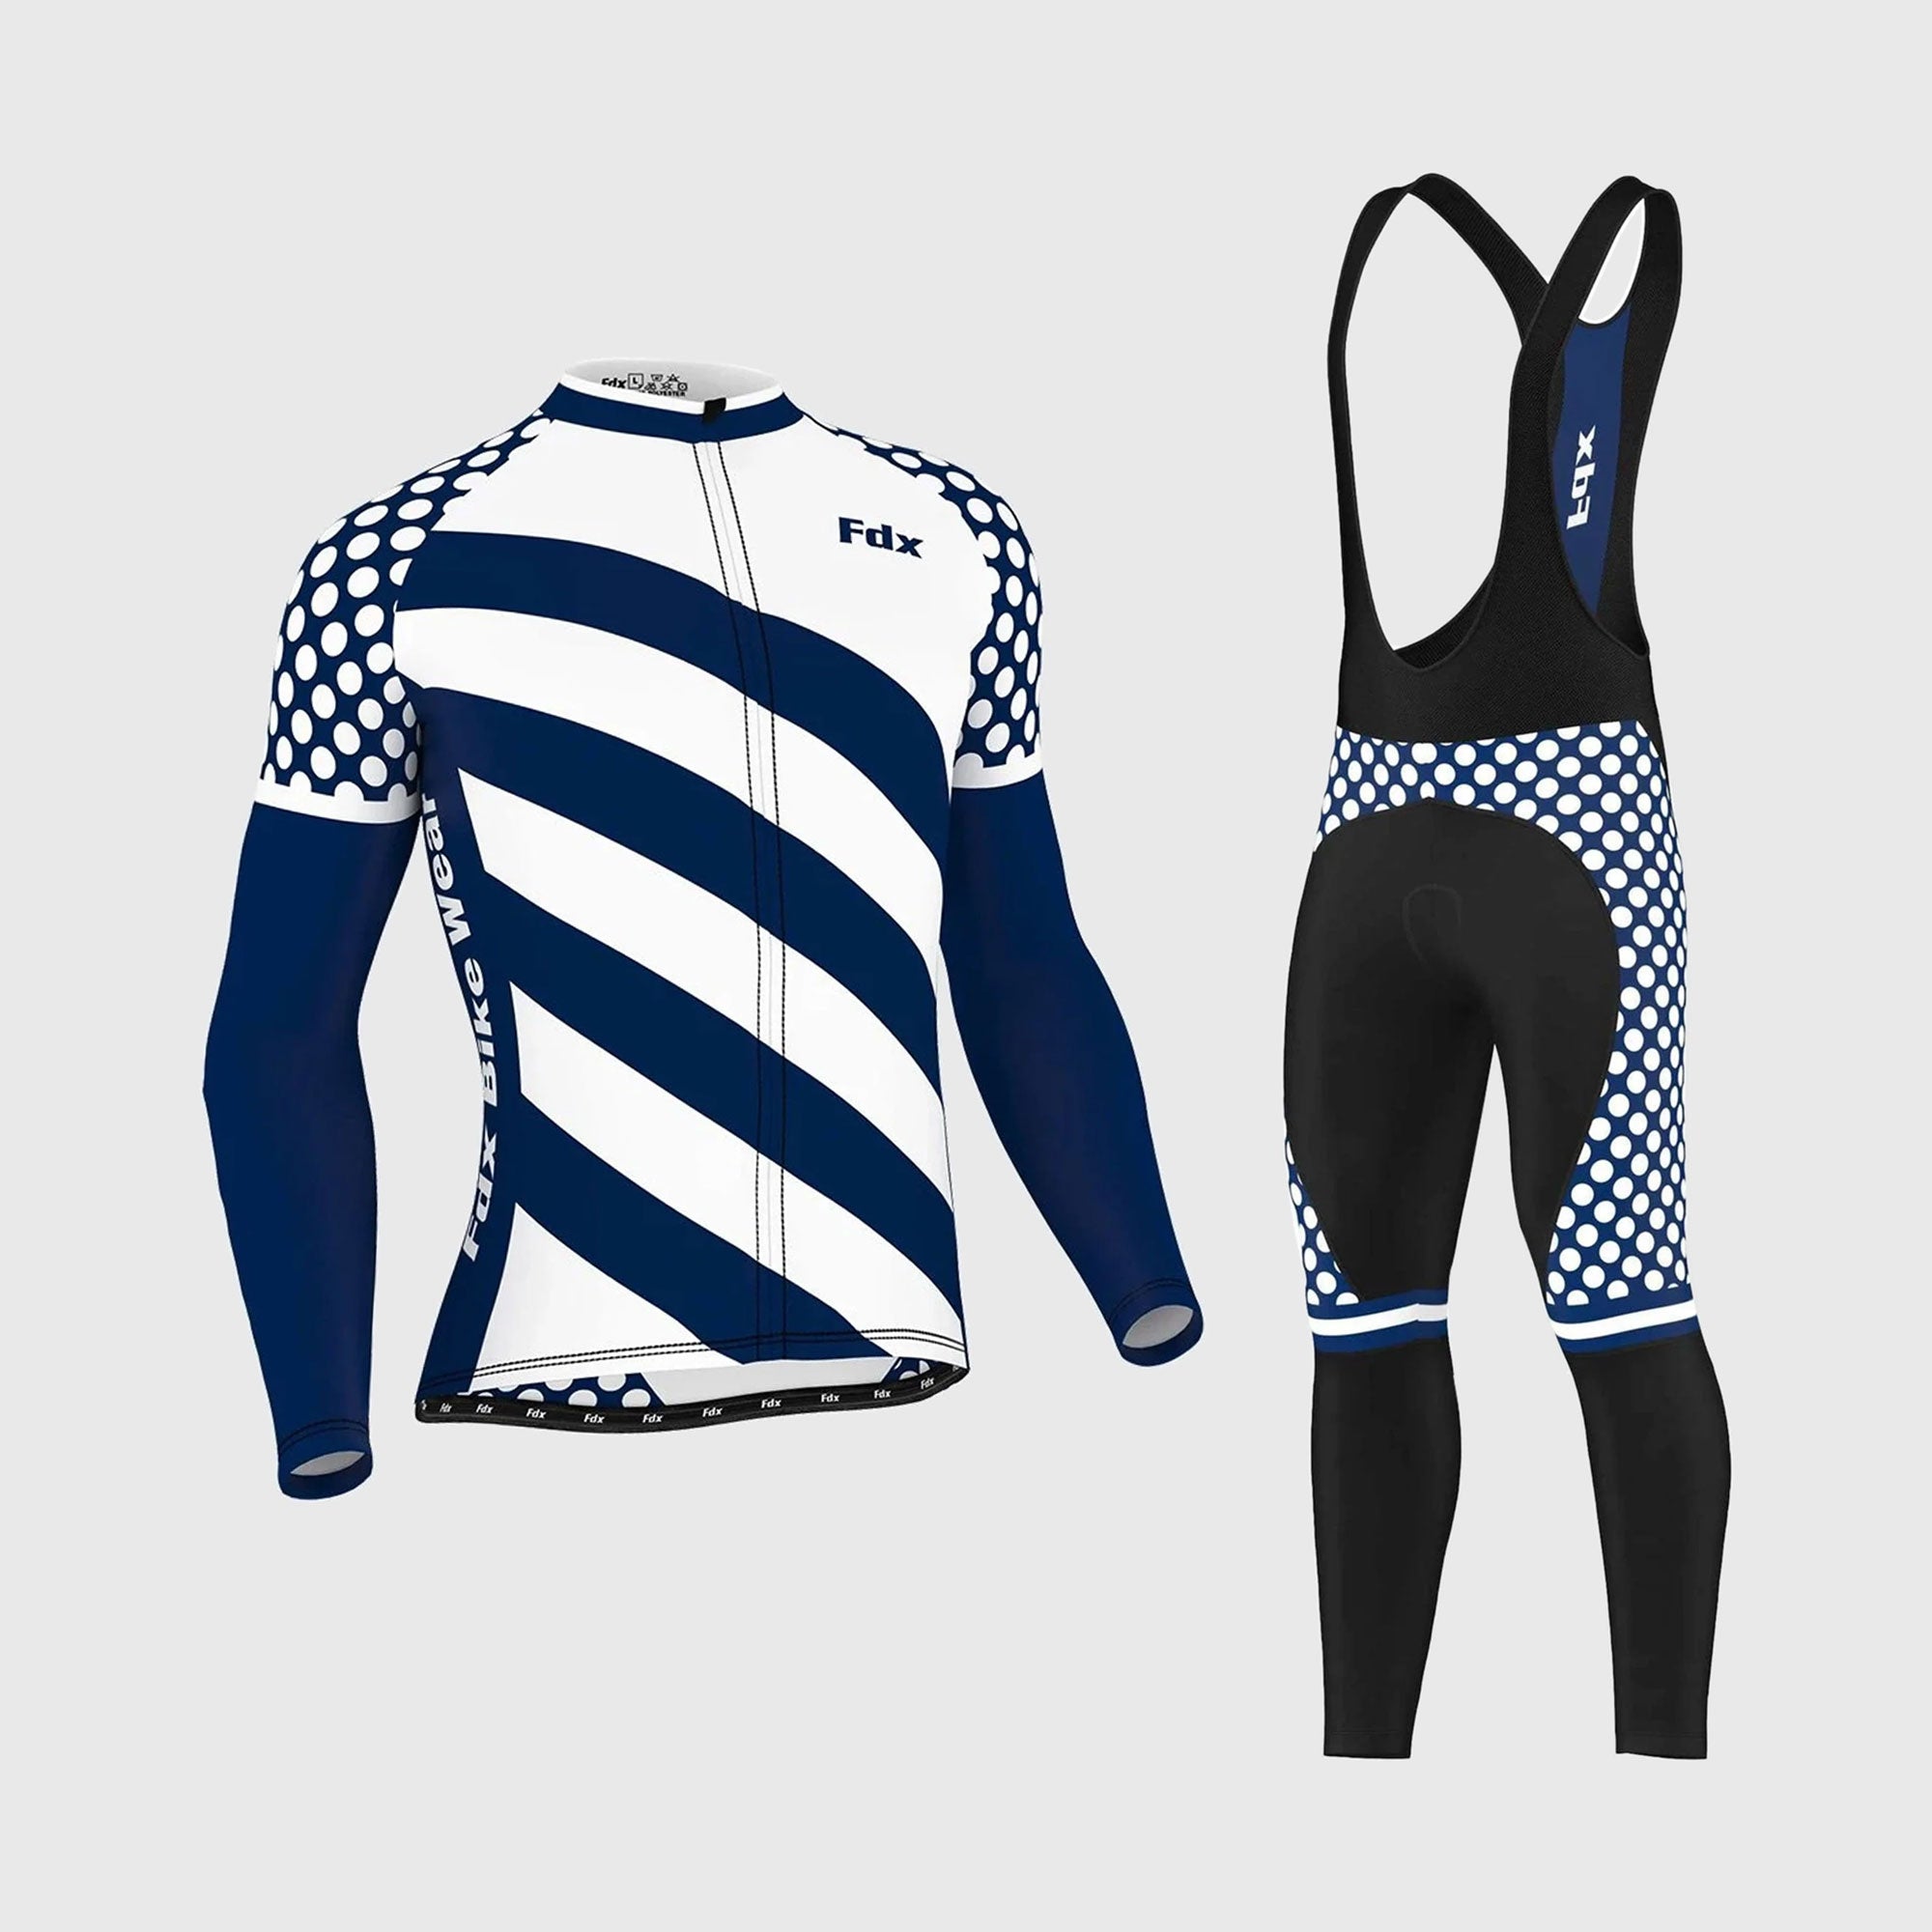 Fdx Men's Set Equin Thermal Roubaix Long Sleeve Cycling Jersey & Bib Tights - White